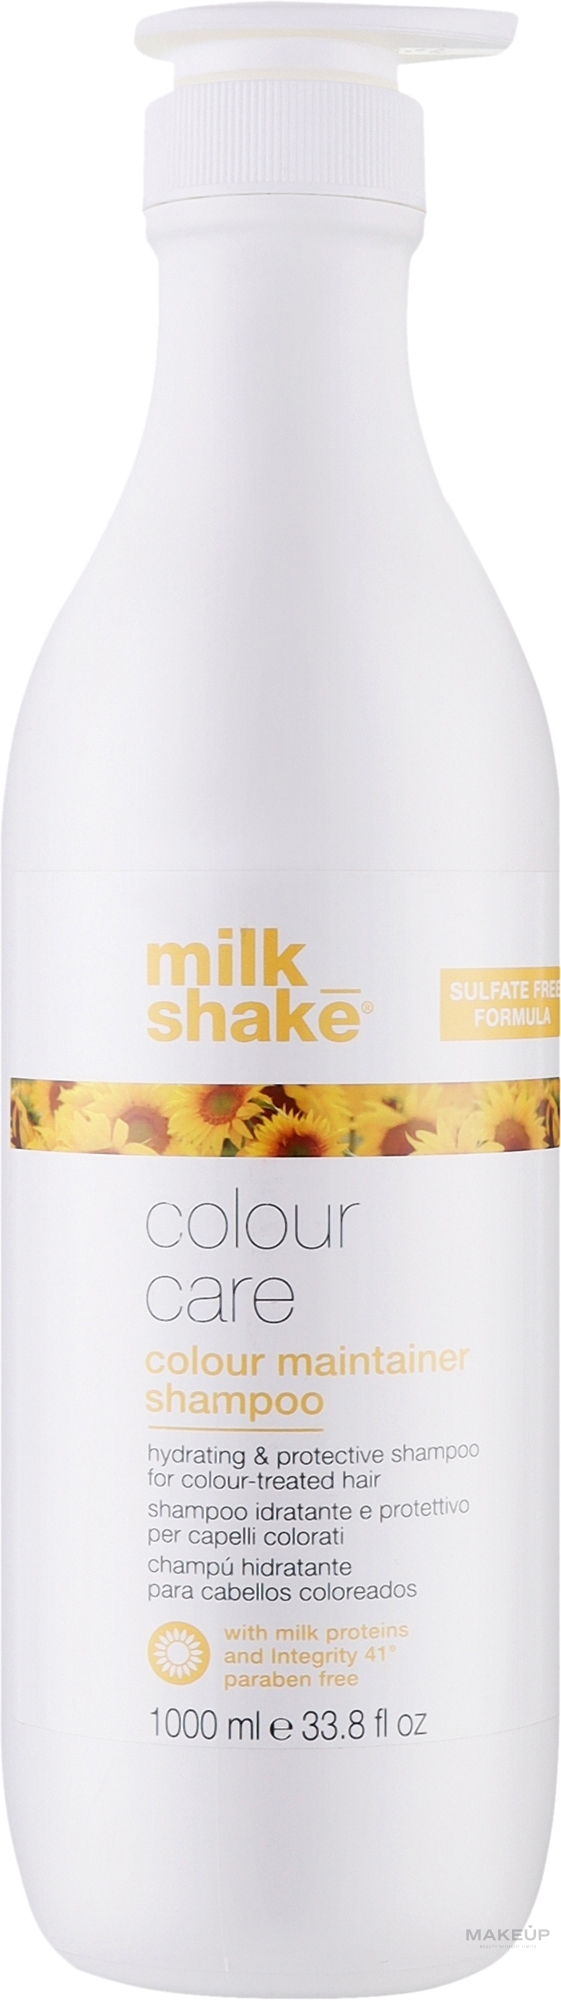 Шампунь для фарбованого волосся без сульфатів - Milk_Shake Color Care Maintainer Shampoo Sulfate Free — фото 1000ml